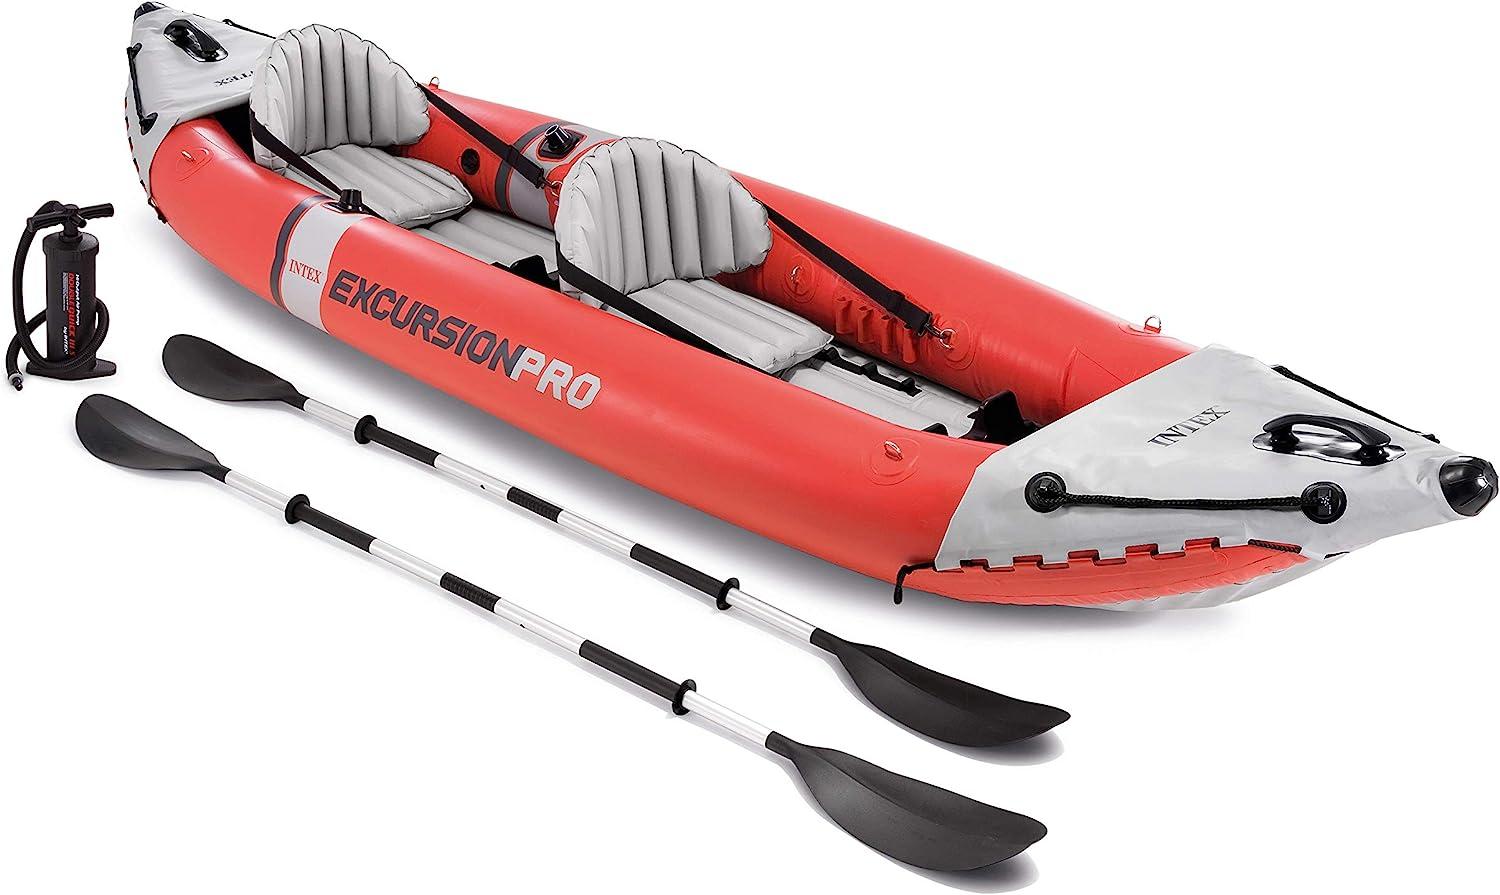 Intex Excursion Pro Kayak Series for $176.61 Shipped